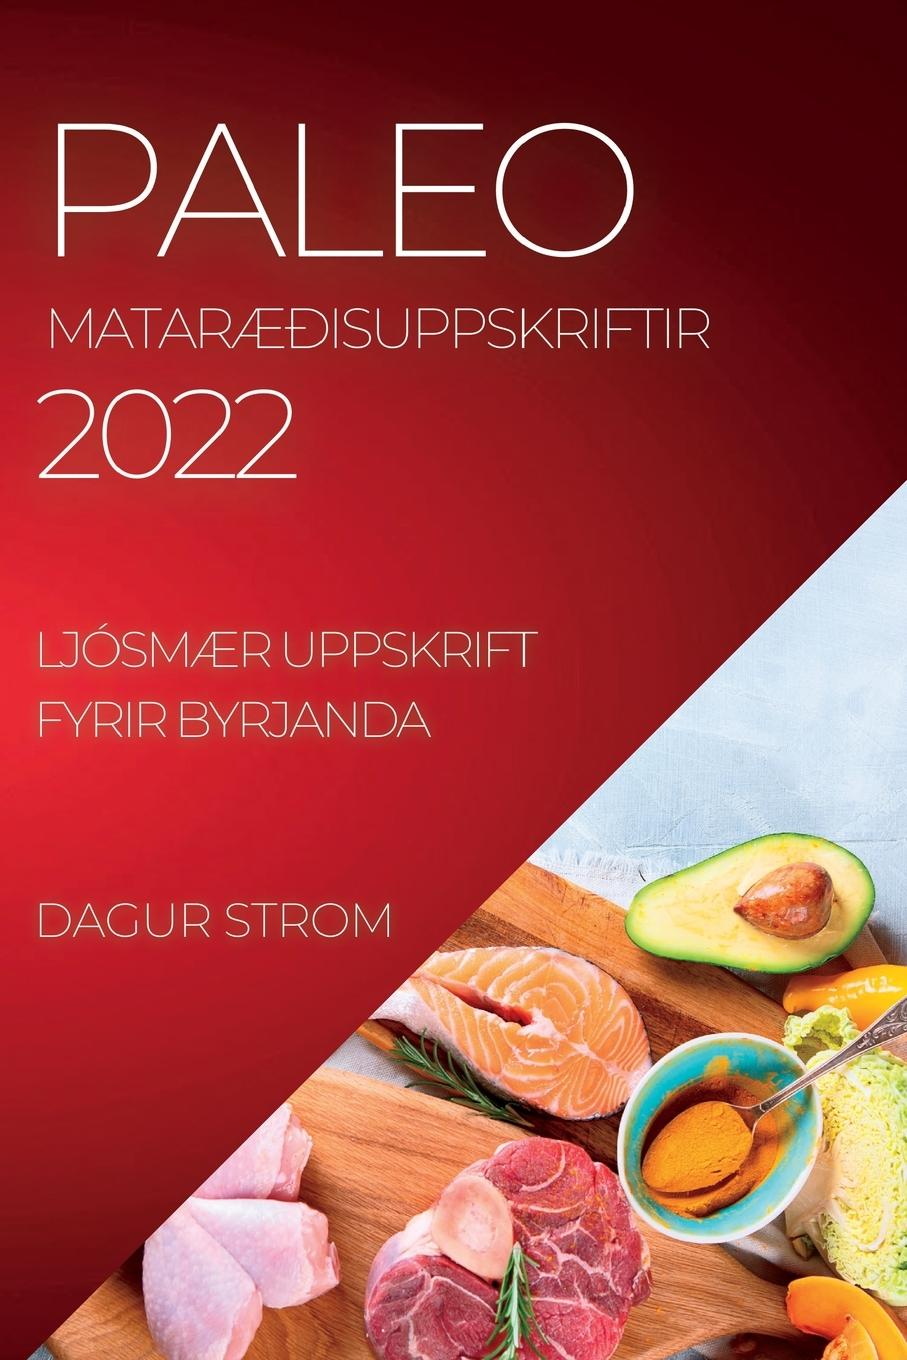 Carte Paleo MatarAEdisuppskriftir 2022 